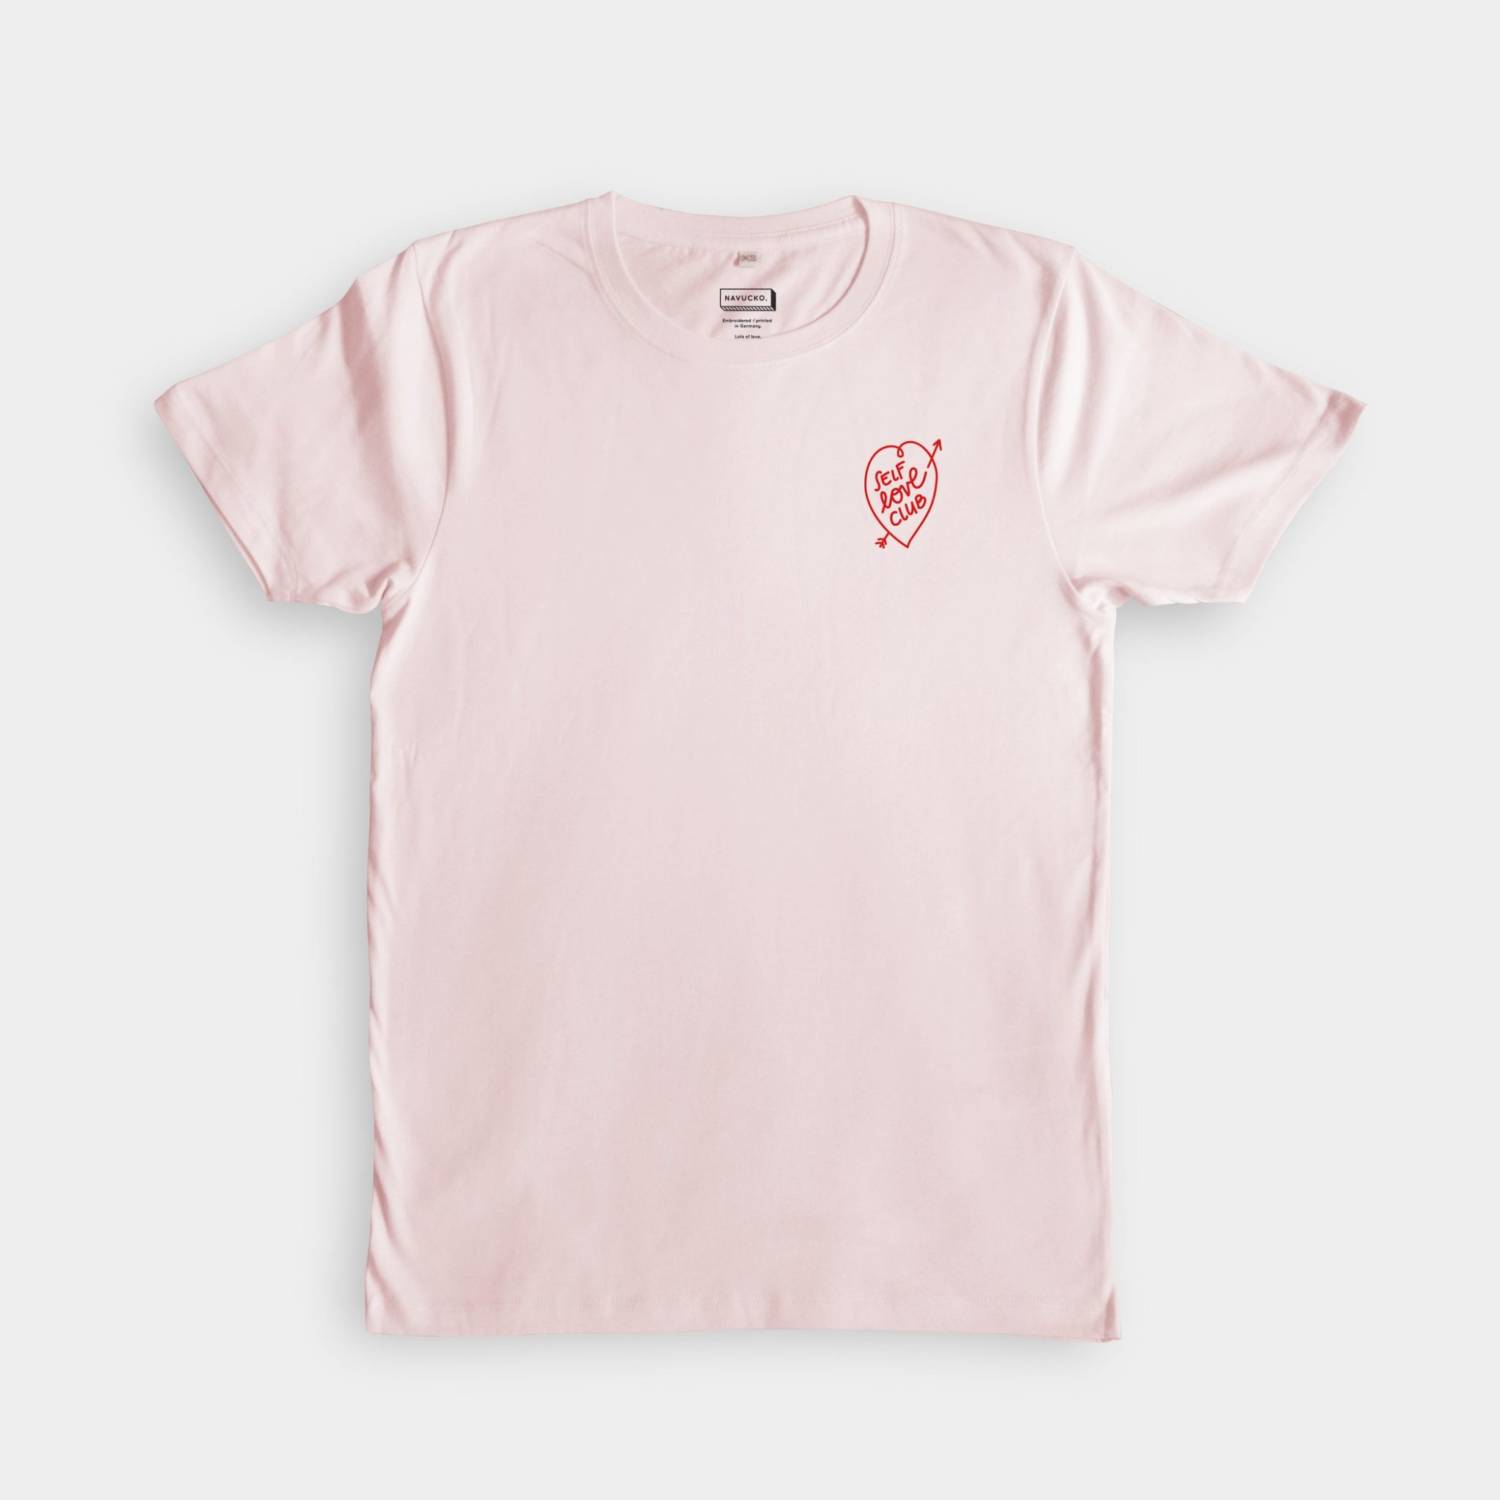 Navucko Rosa T-Shirt Self Love Club mit rotem Motiv